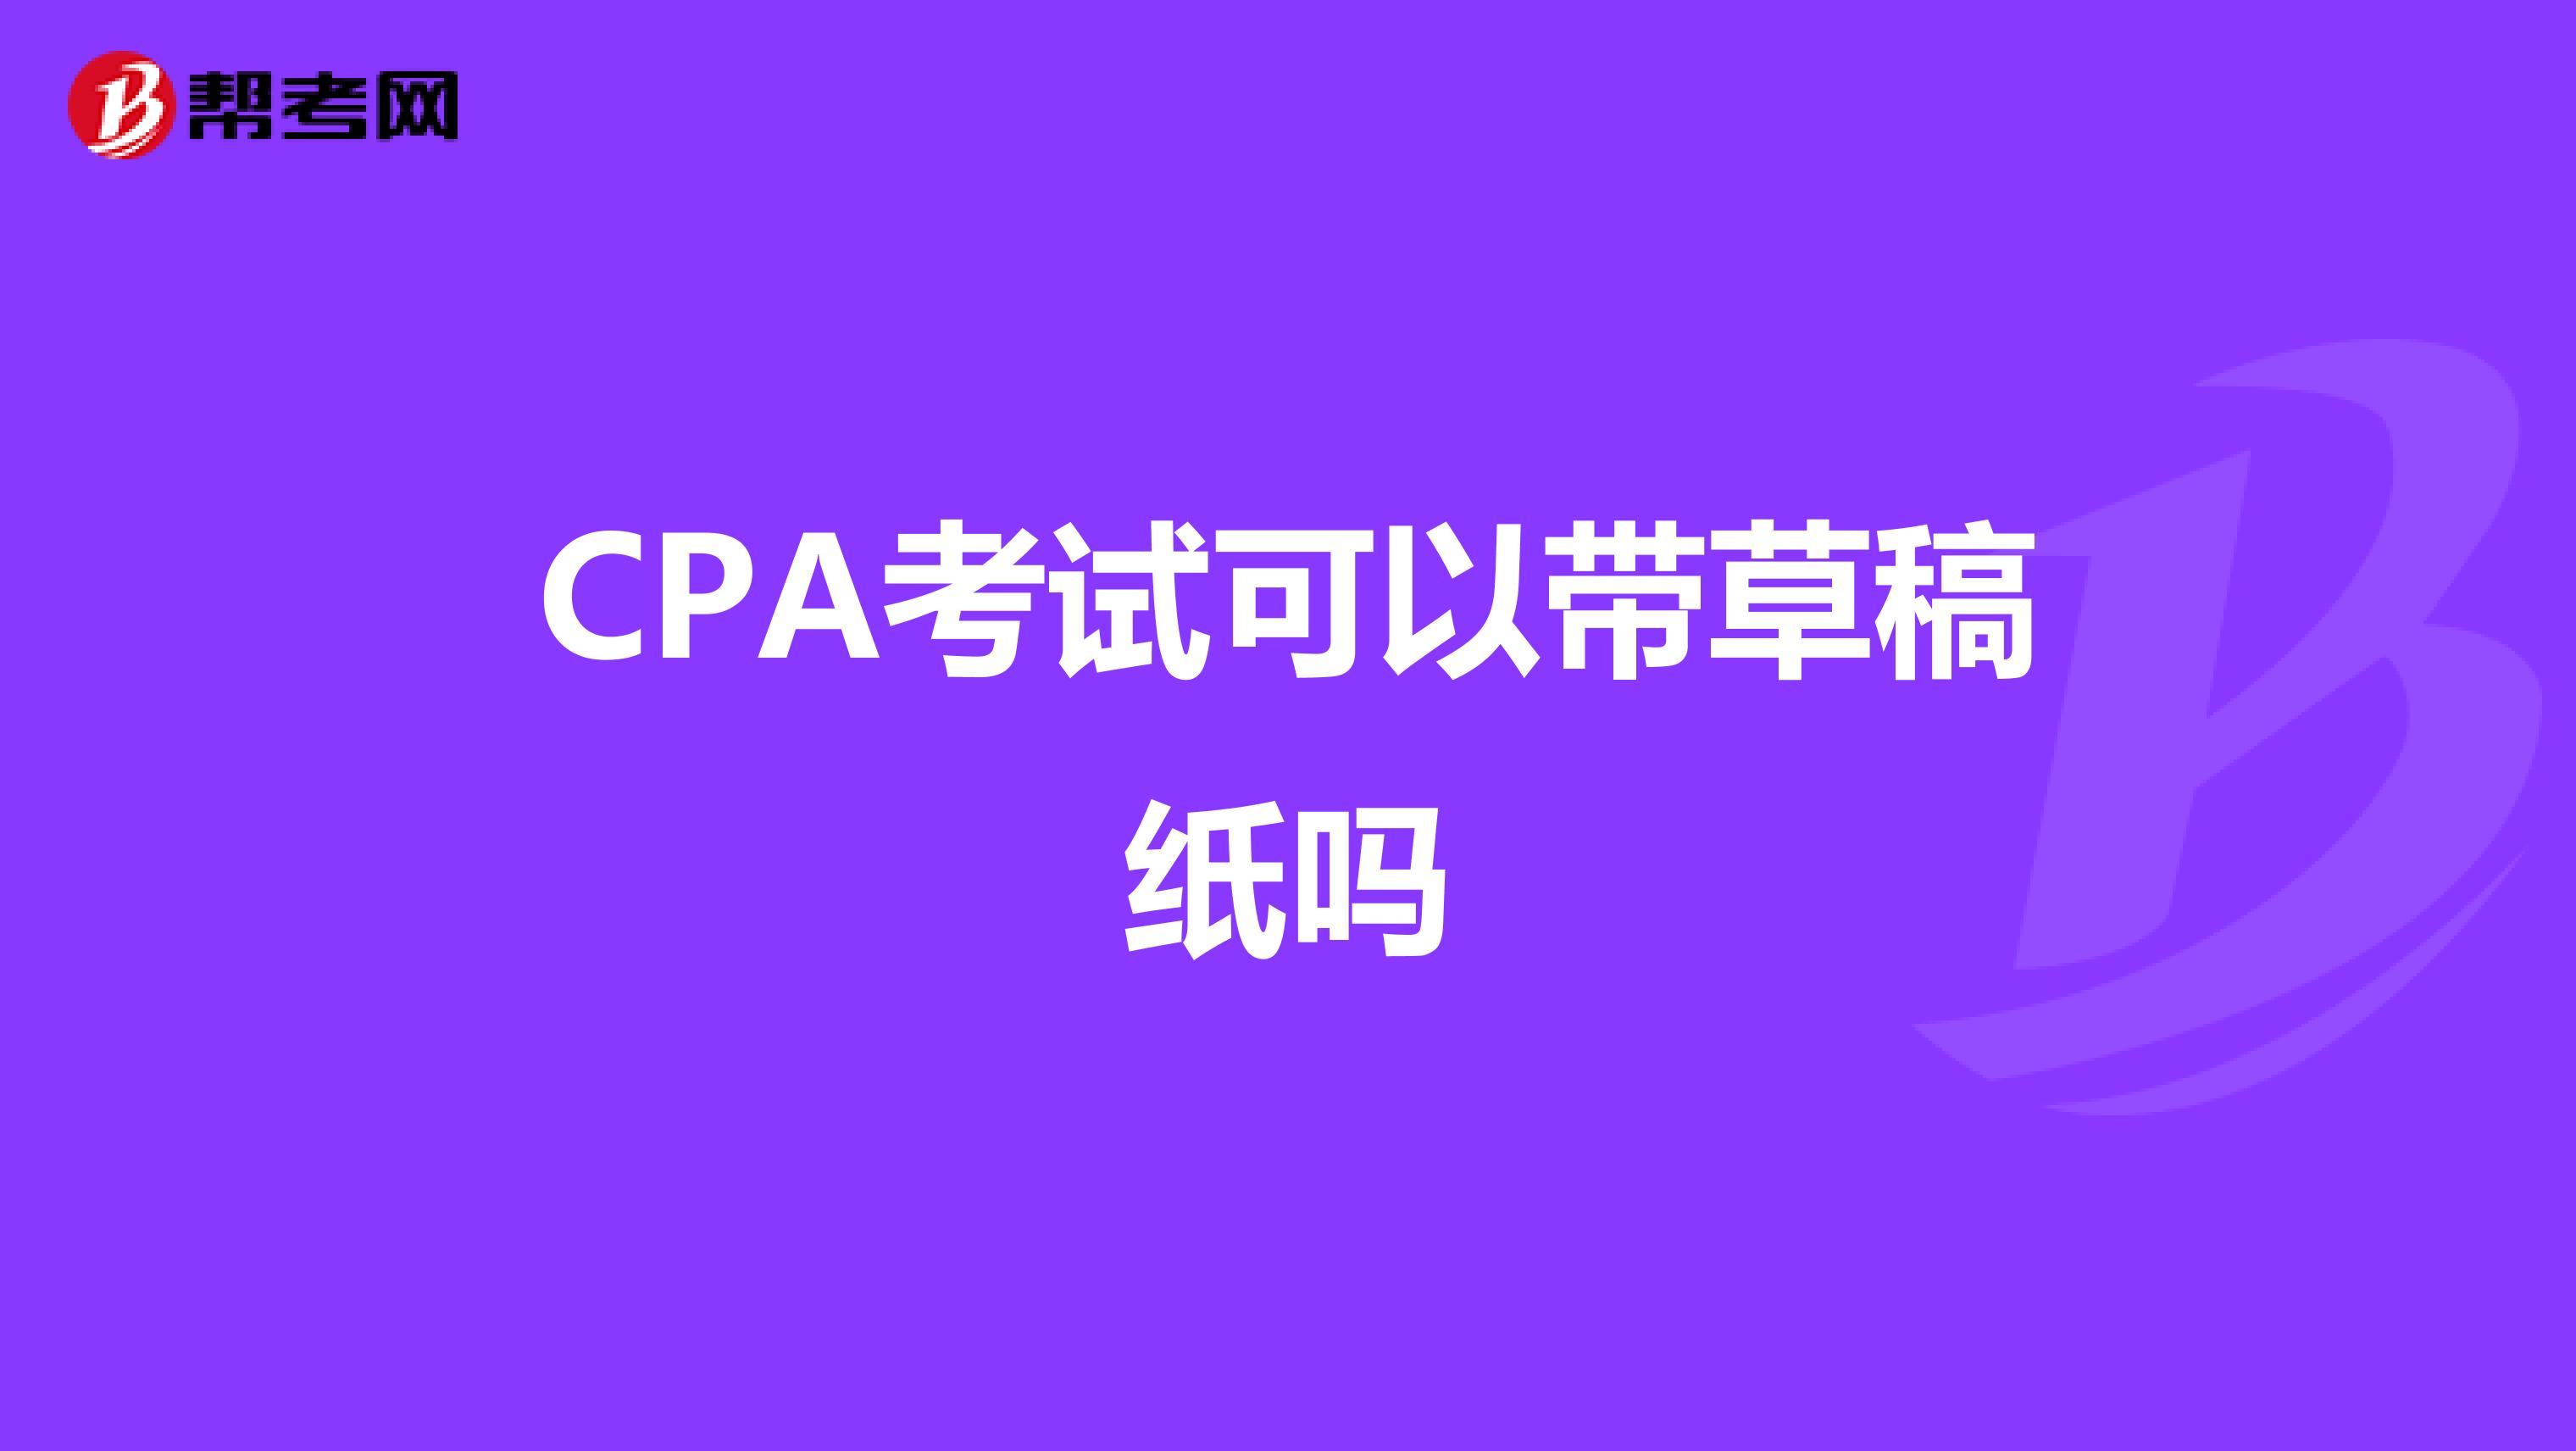 CPA考试可以带草稿纸吗